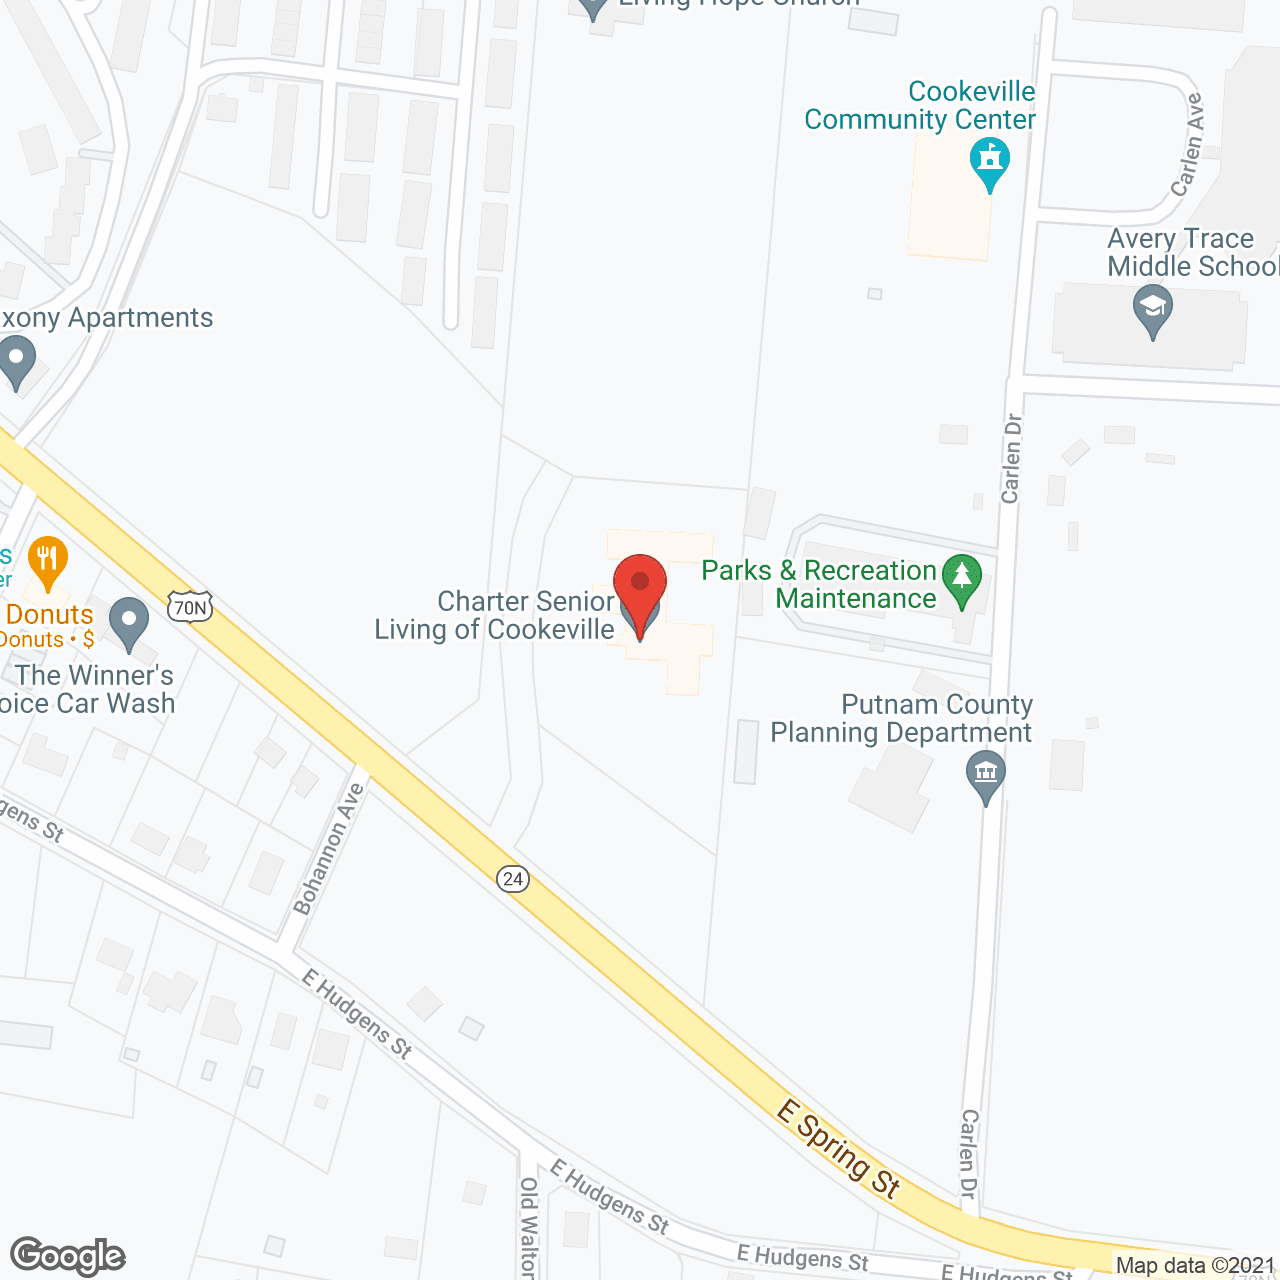 Morningside of Cookeville in google map